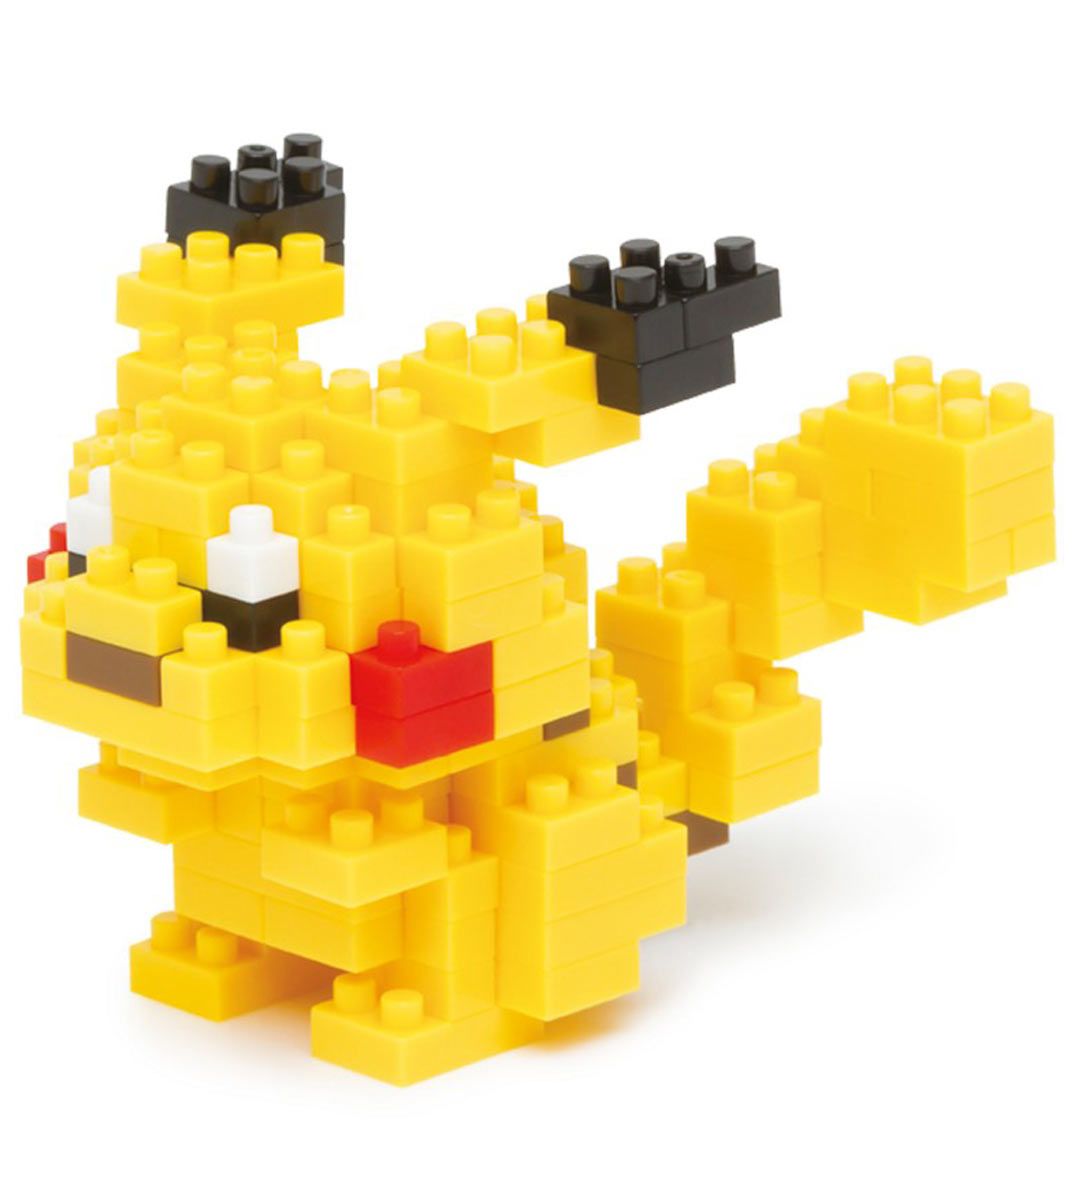 Nanoblock - Pokémon Pikachu - NBPM 001